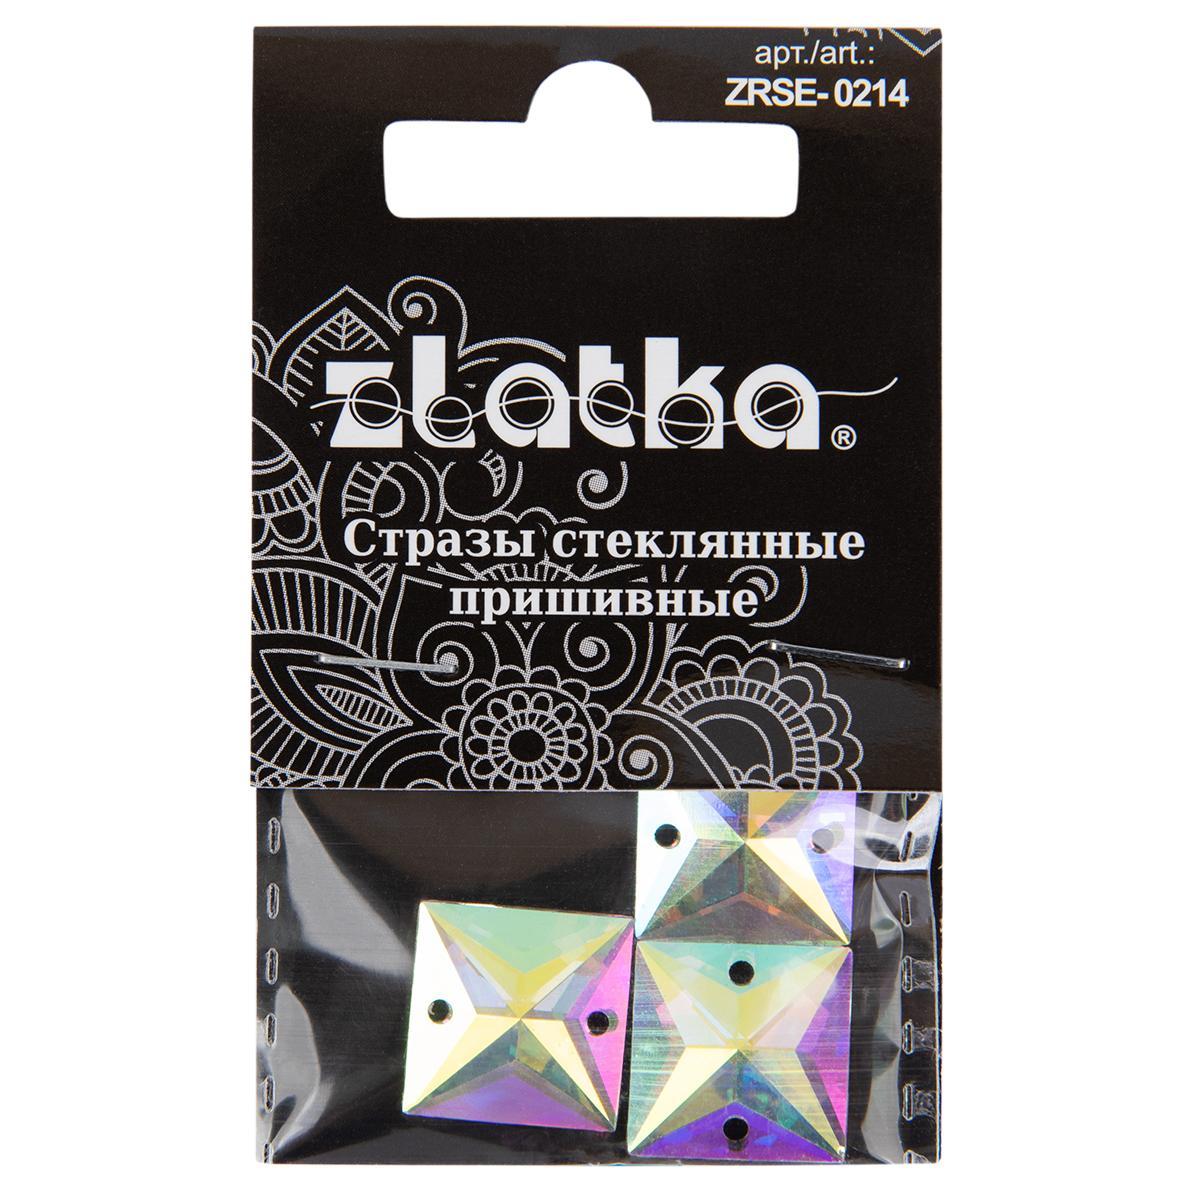 Страз "Zlatka" ZRSE-0214 AB-Crystal 14 х 14 мм стекло 5 x 3 шт в пакете с картонным еврослотом